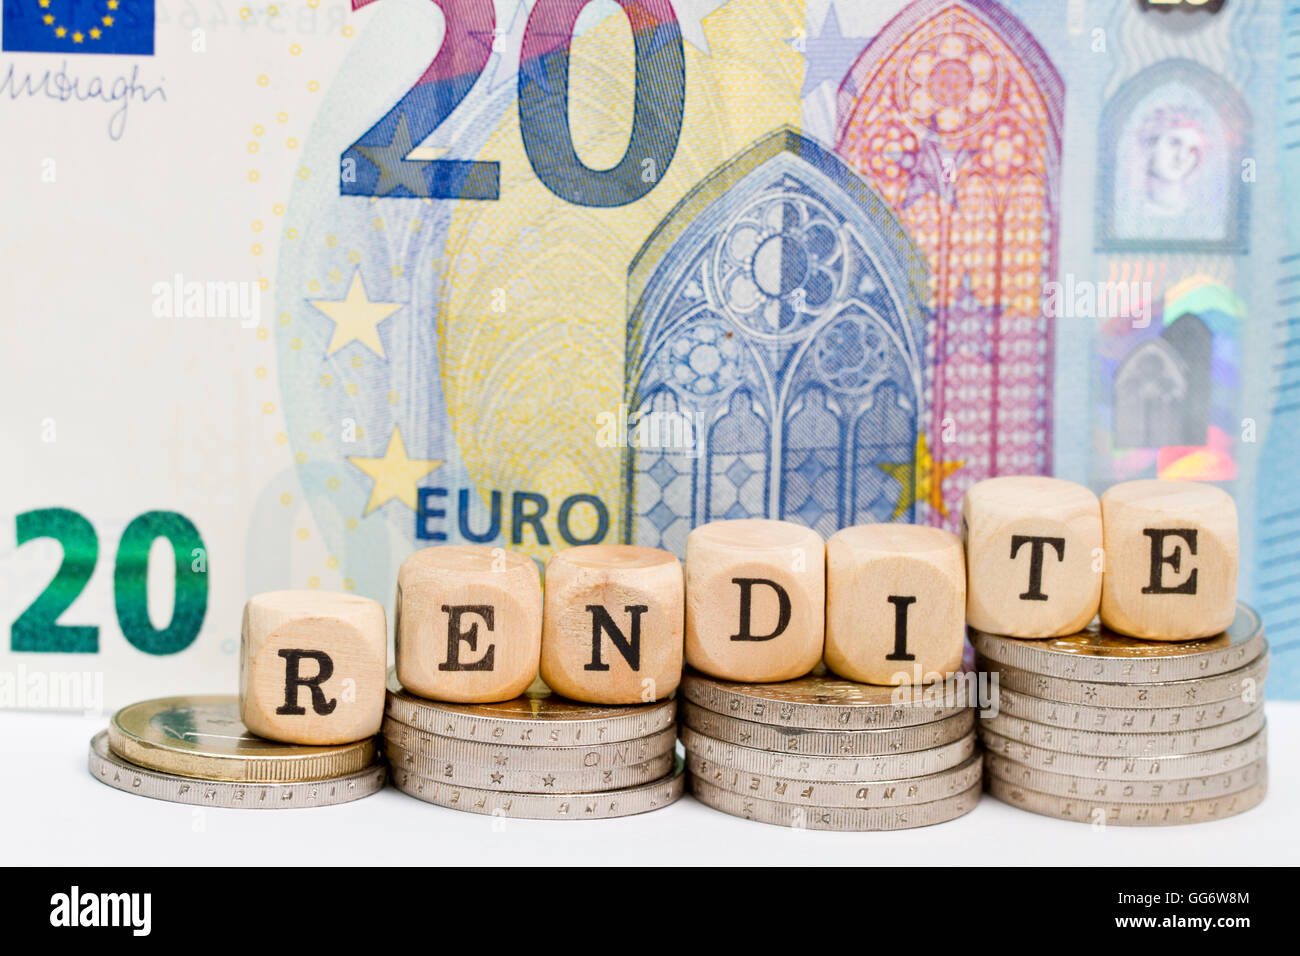 Rendite euro Foto de stock